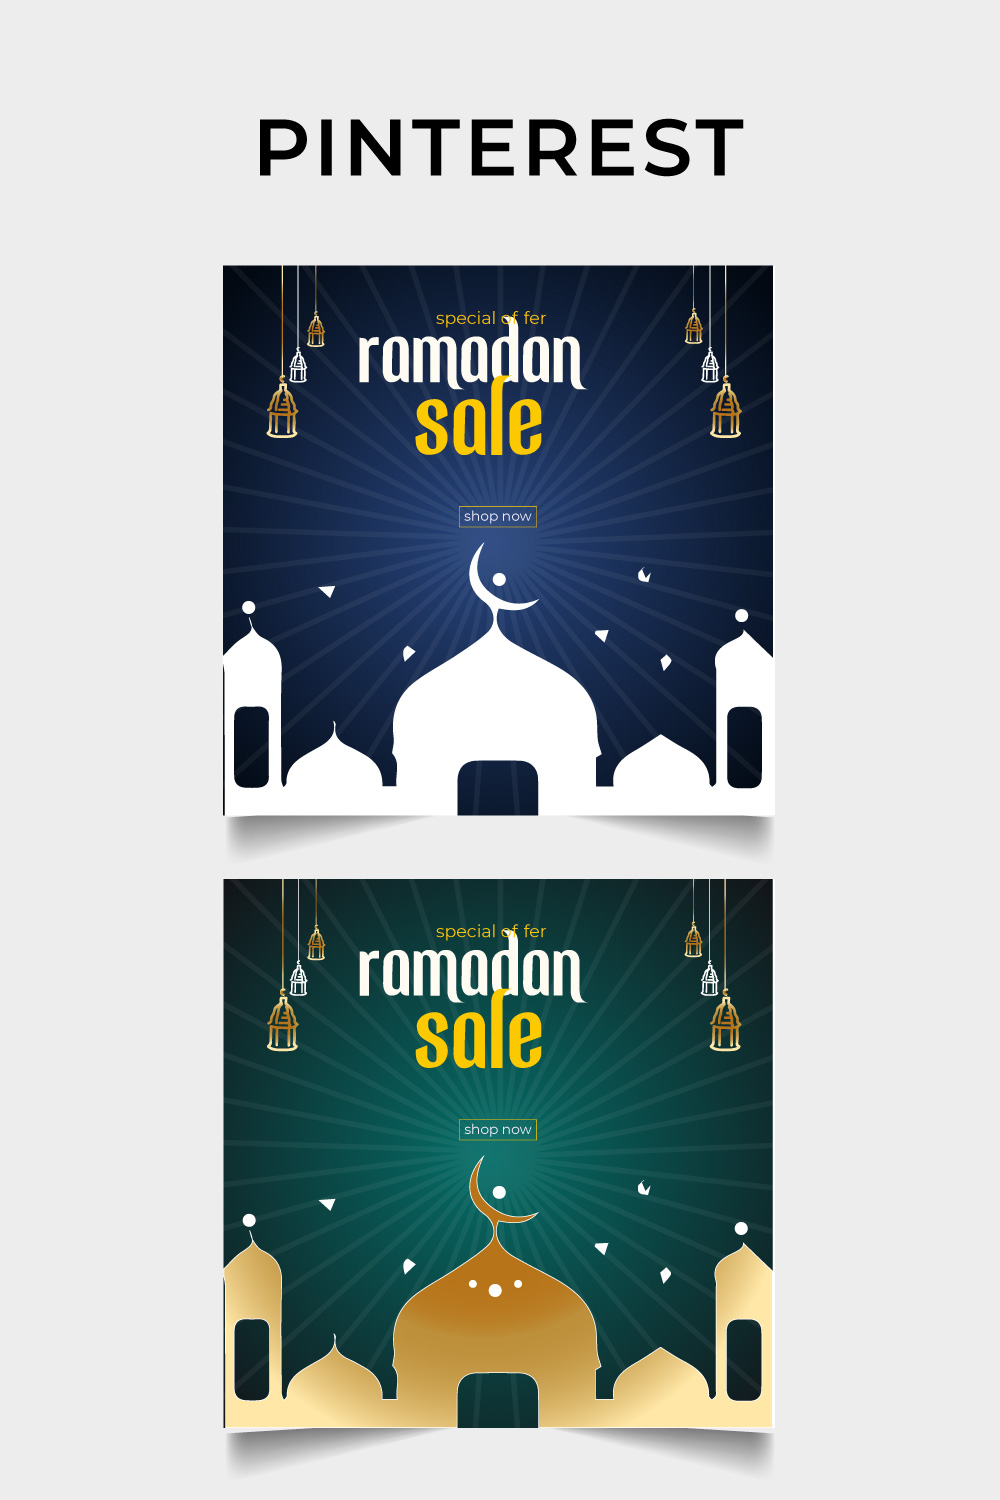 Ramadan sale social media post template design for social media banner pinterest preview image.